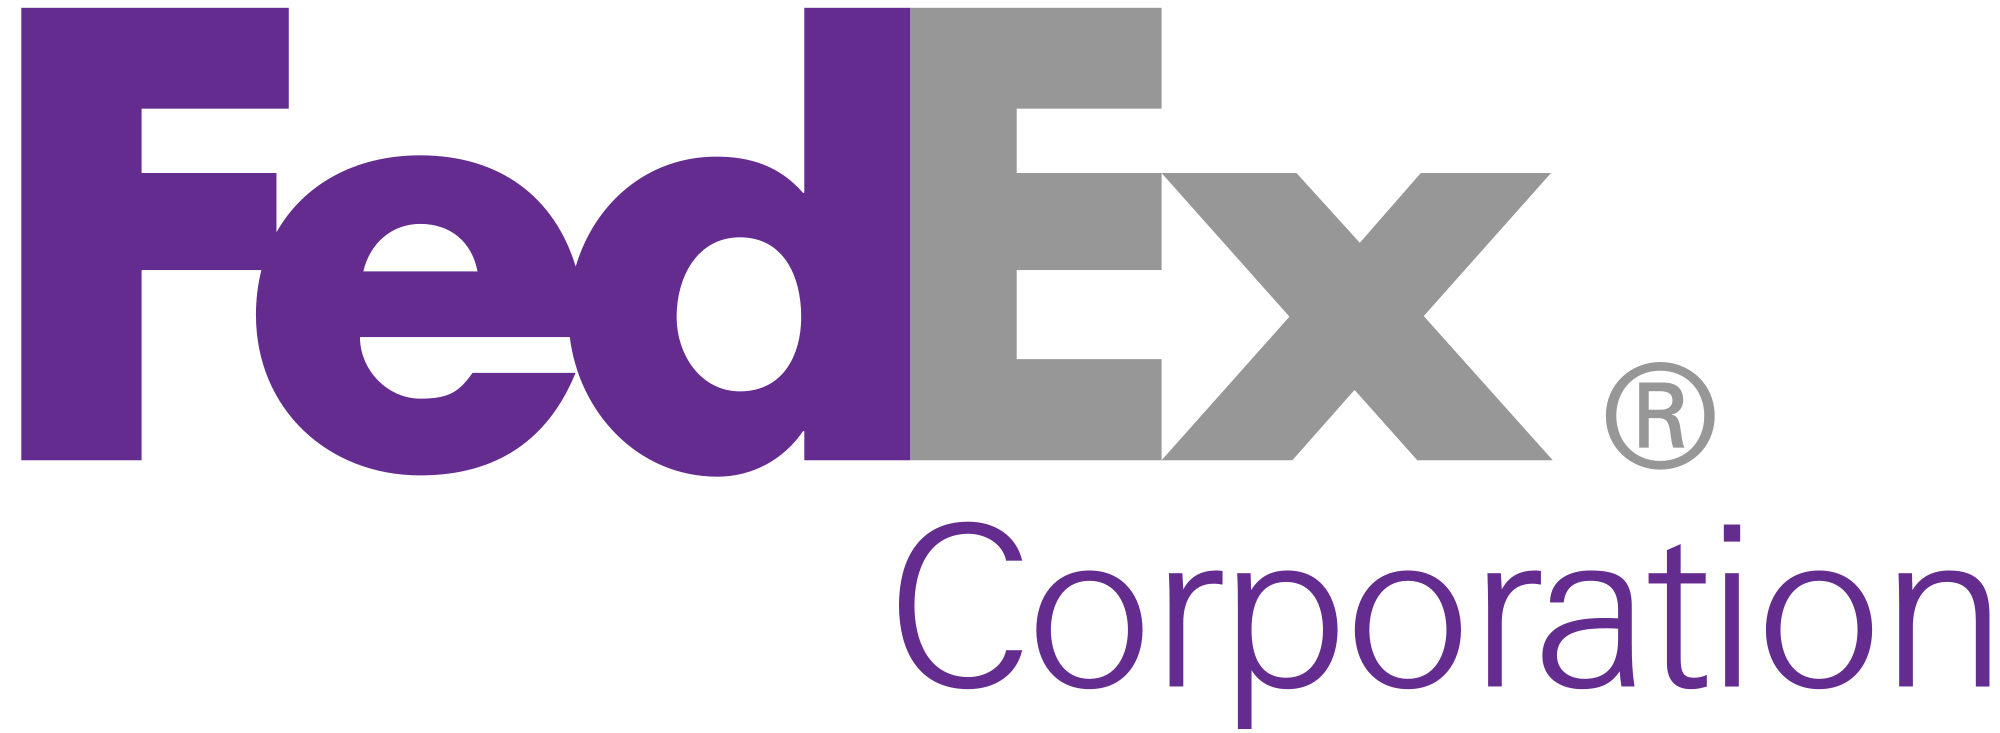 Logo Fedex Office PNG - 29164